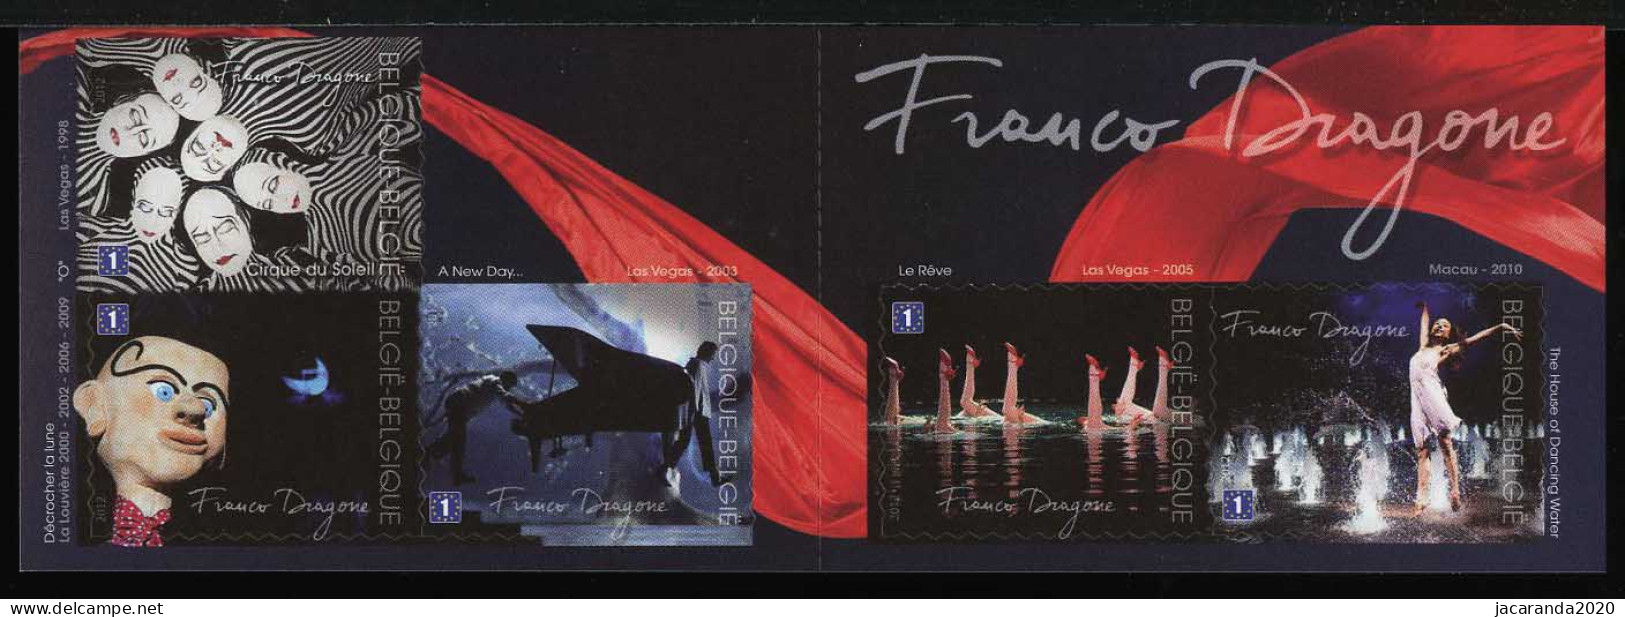 België B127 - Franco Dragone - Cirque Du Soleil - 1E - Zelfklevend - Autocollants - 2012 - 1997-… Permanente Geldigheid [B]